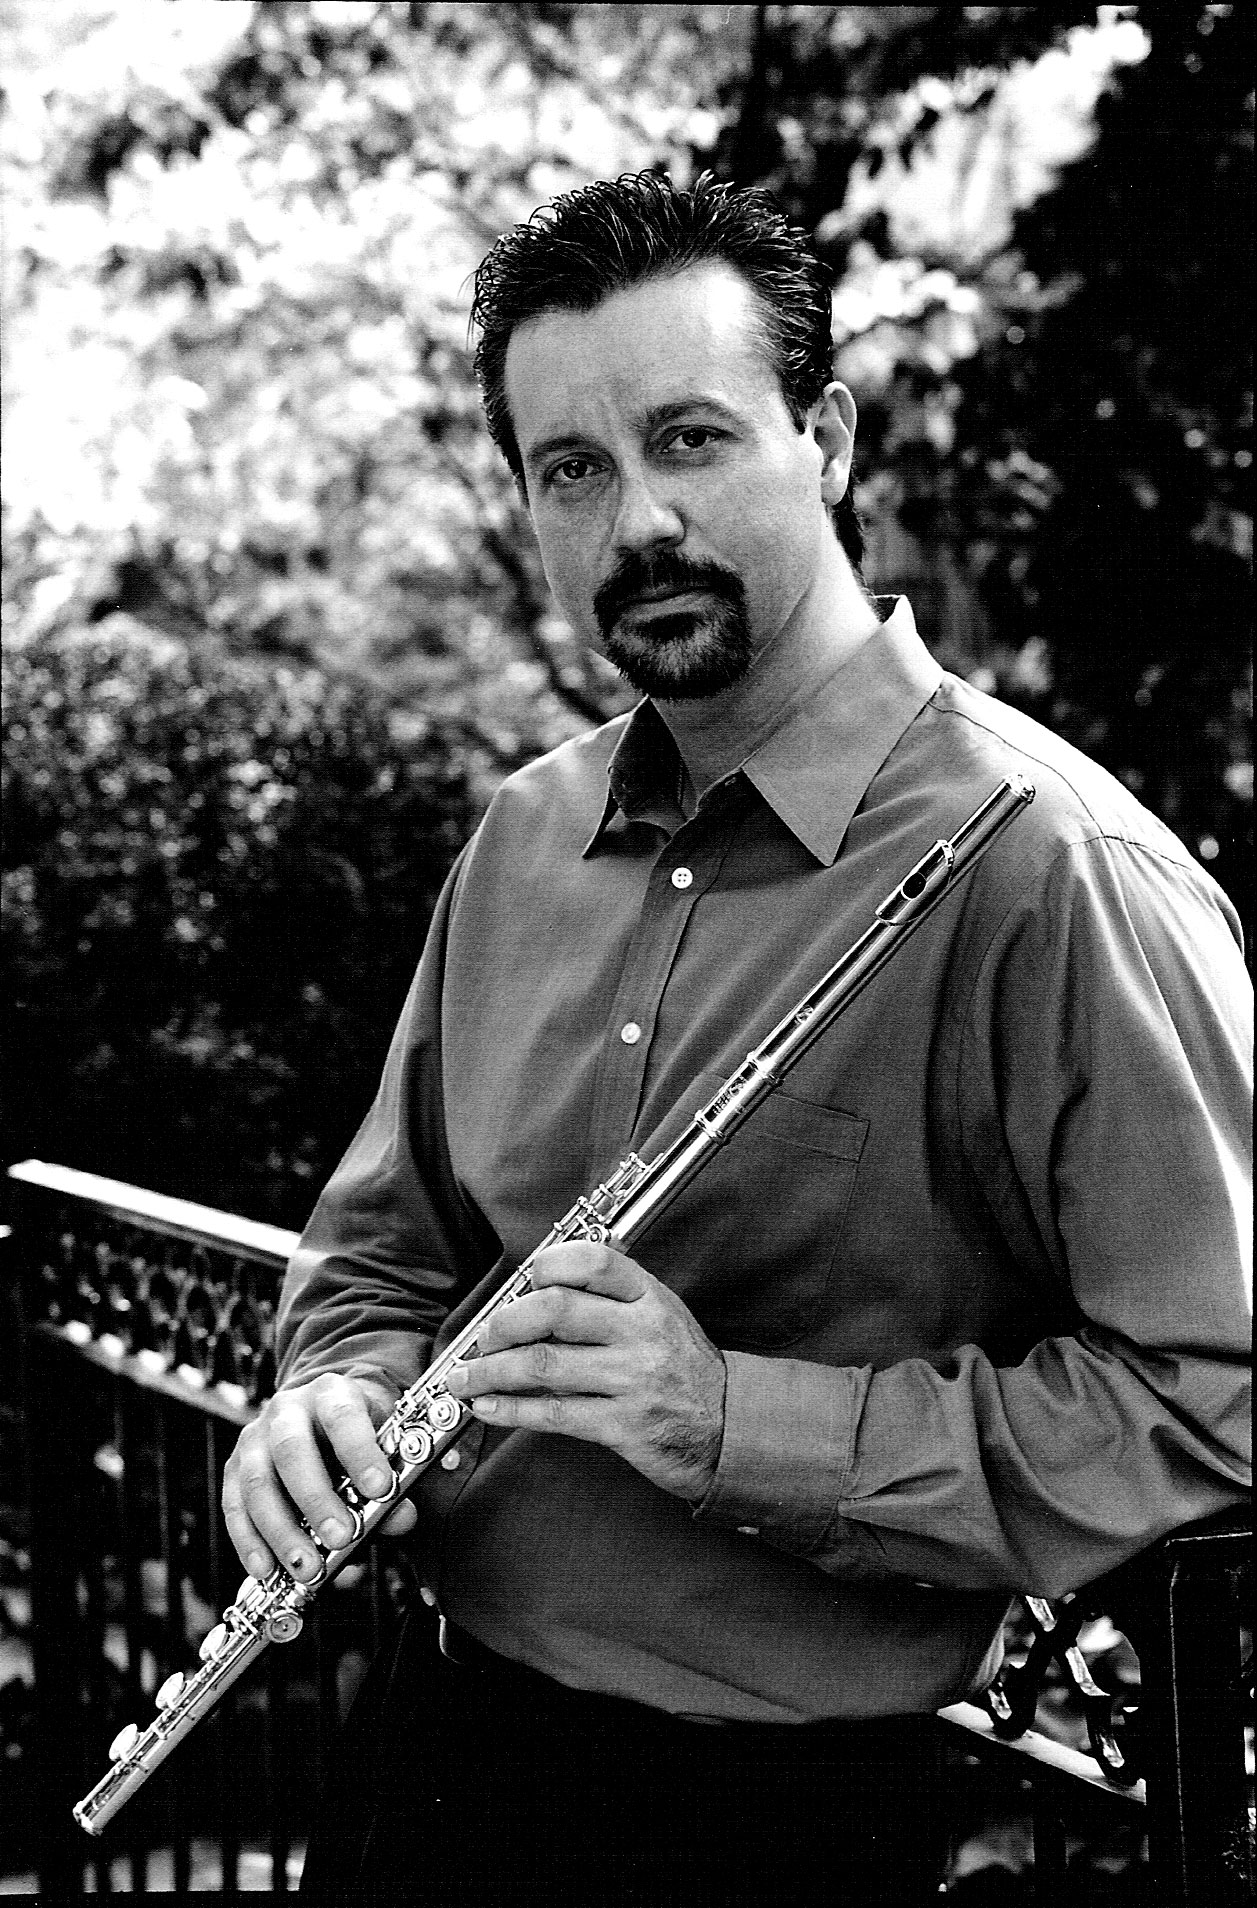 David LaVorgna holding a flute